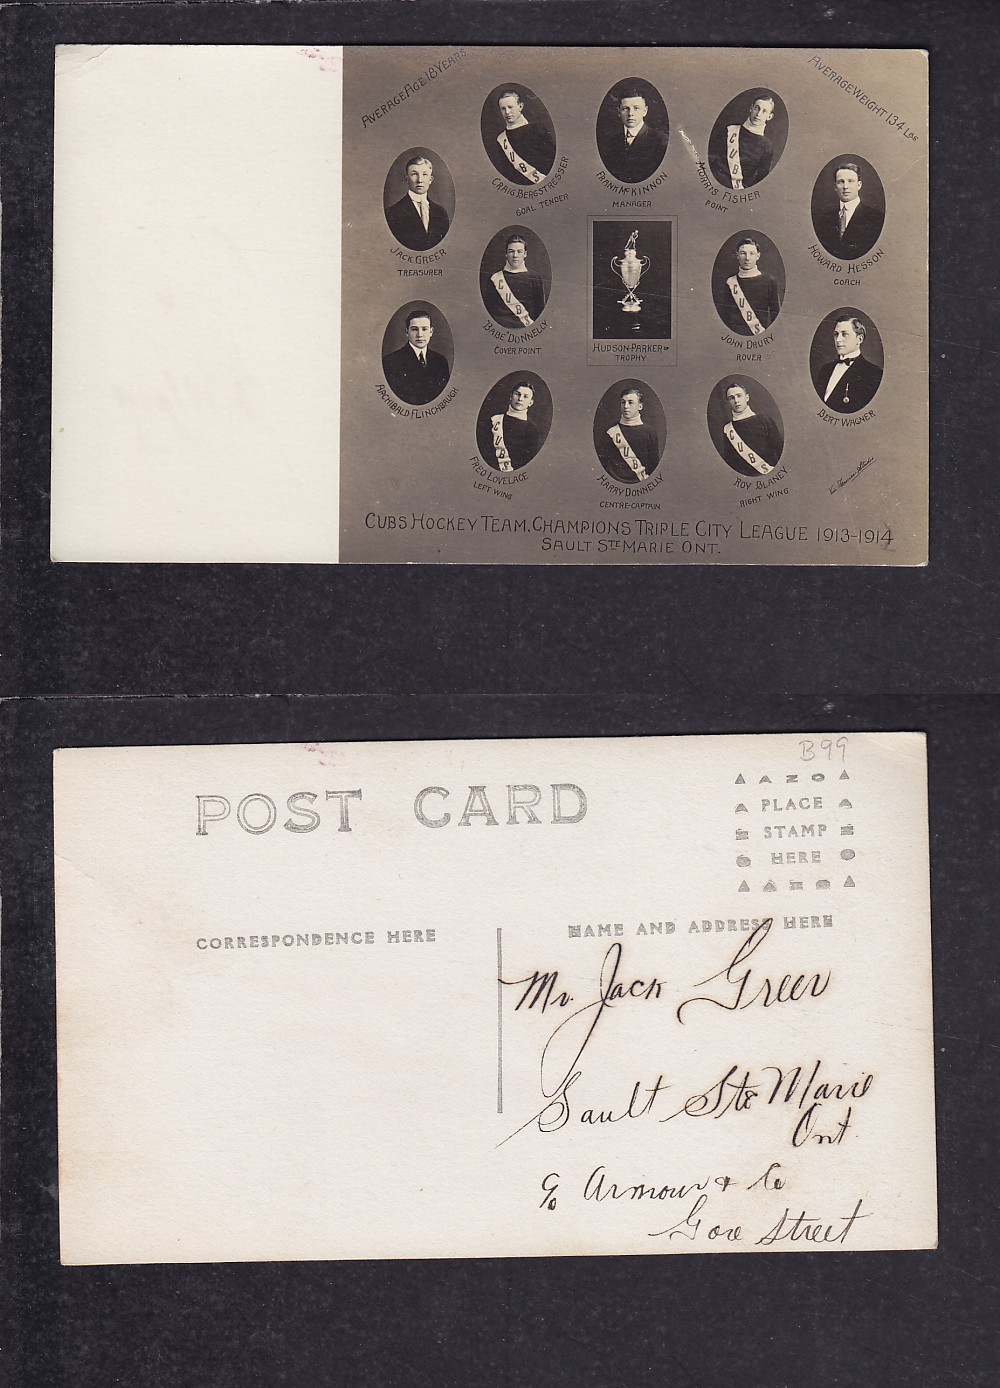 1913-14 SAULT STE MARIE HOCKEY TEAM POST CARD photo